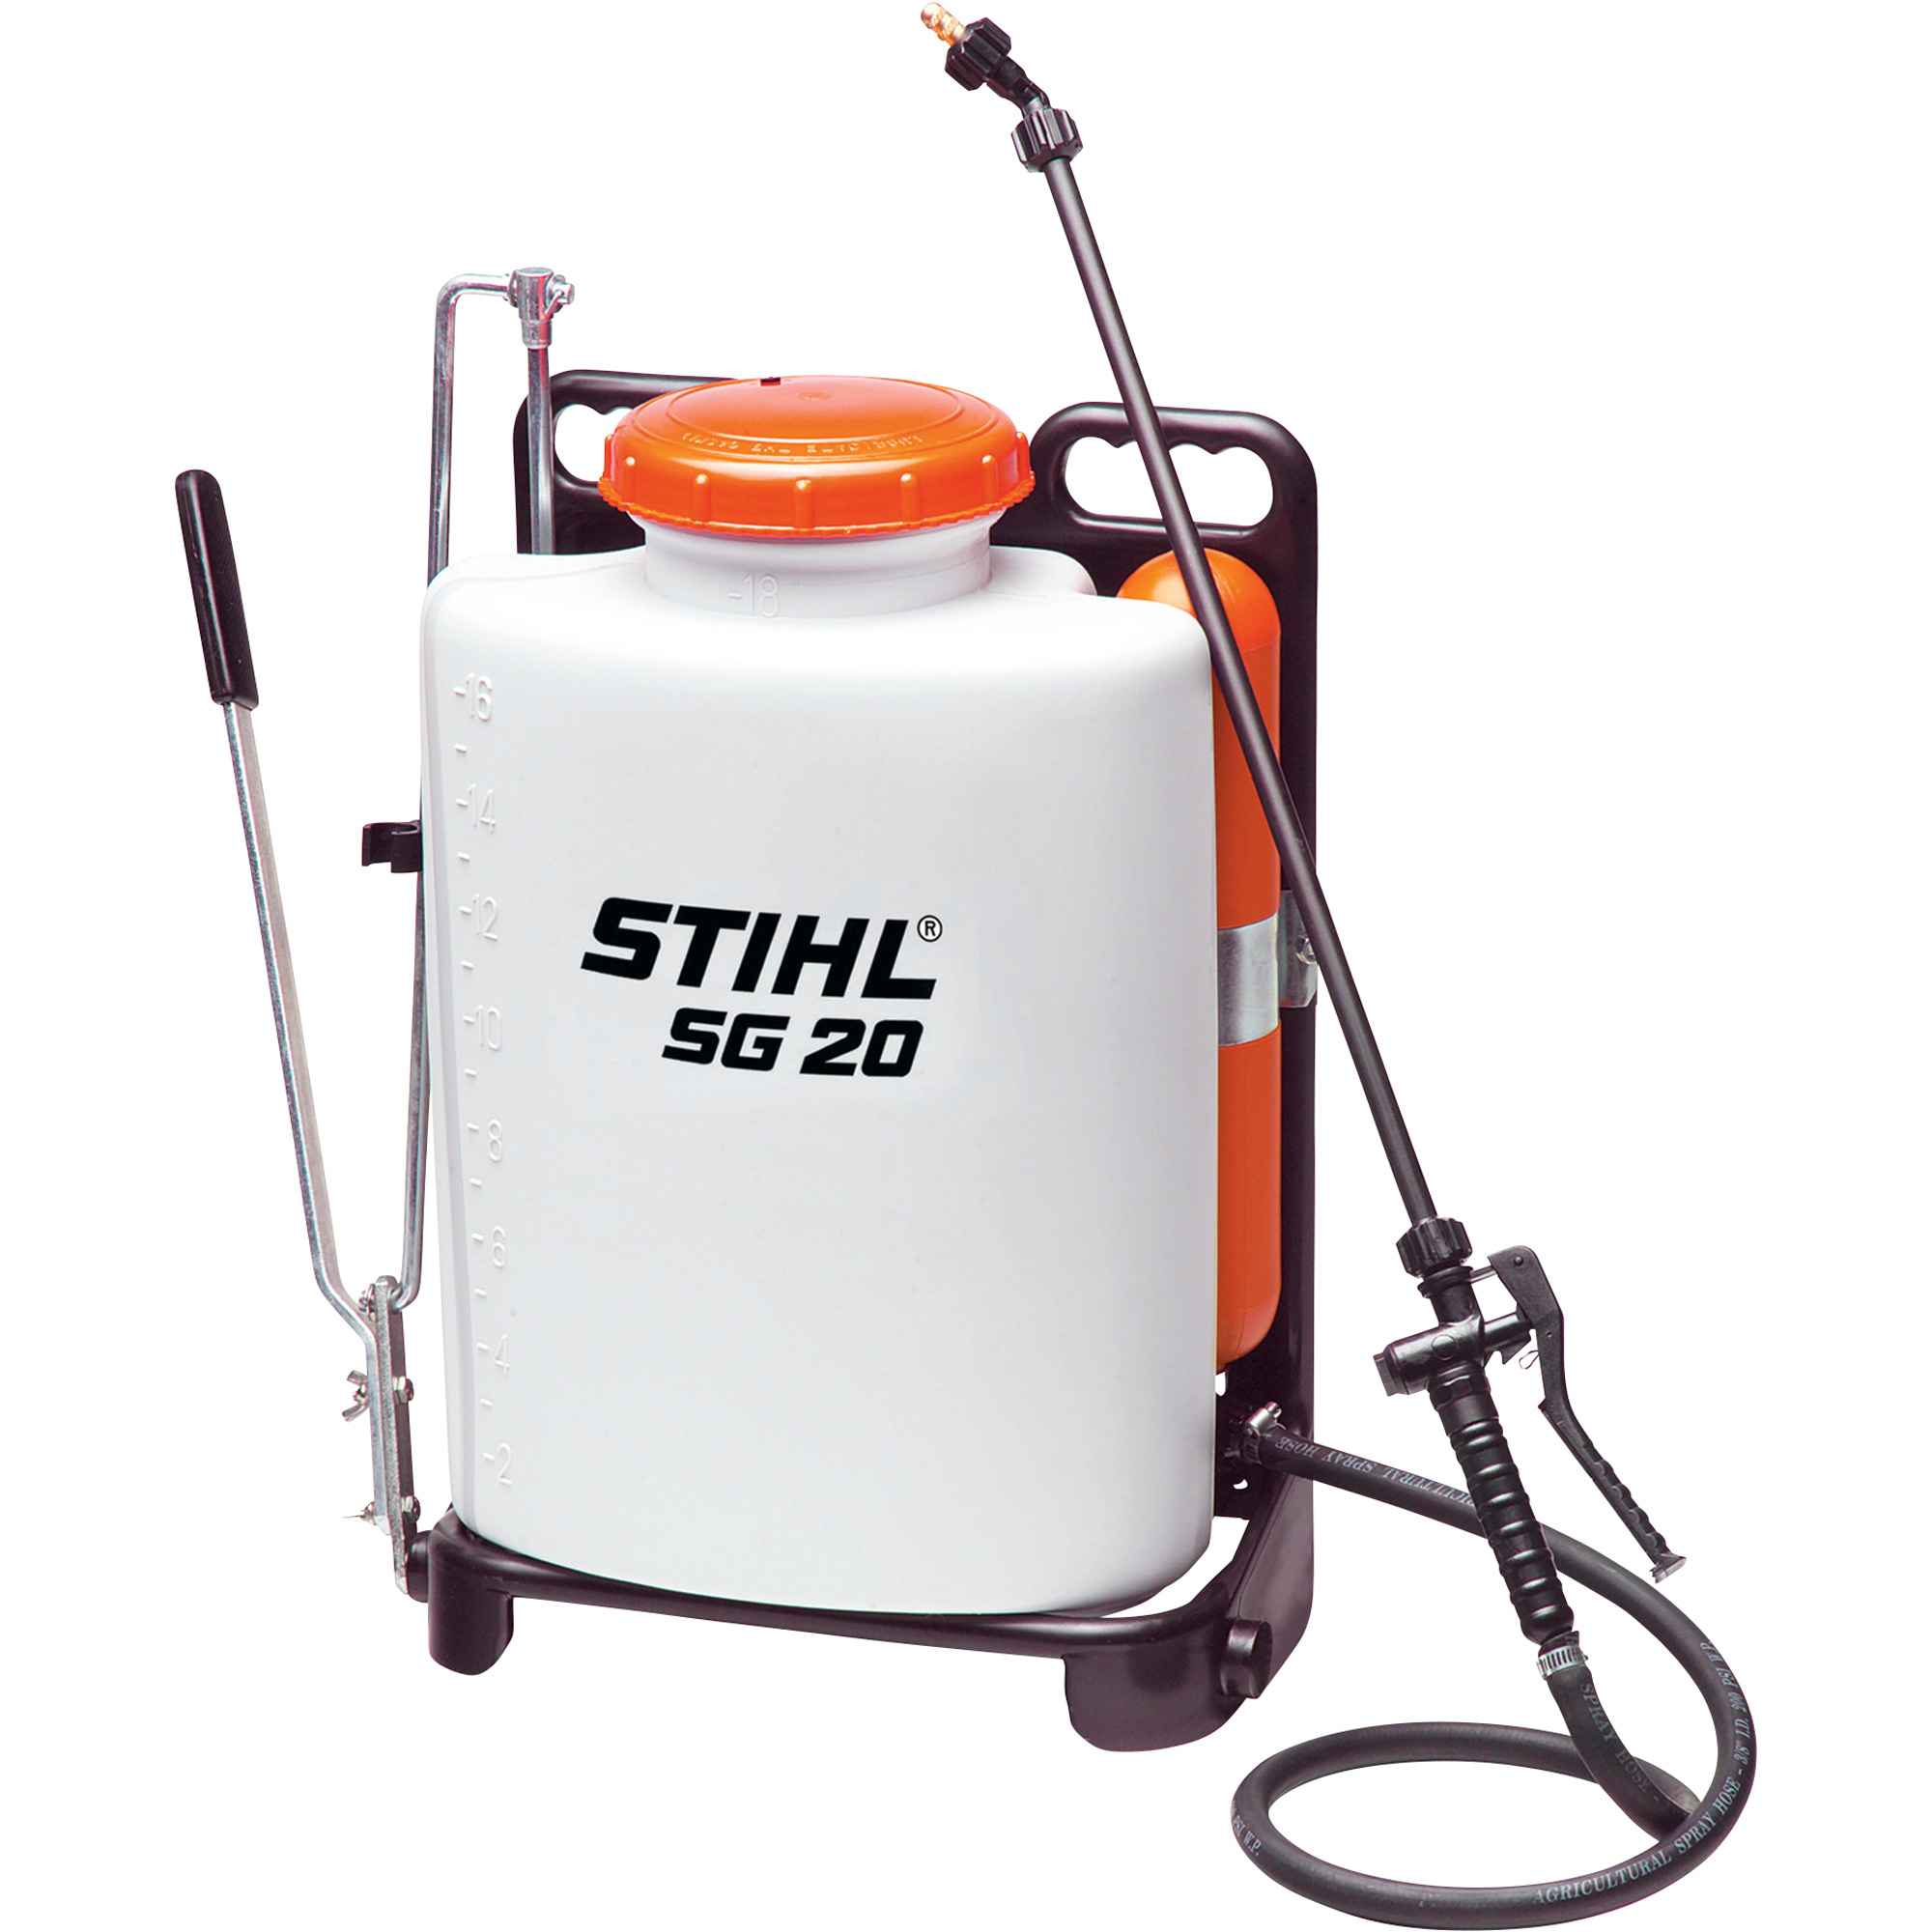 Stihl Portable Backpack Sprayer â 4.75-Gallon Capacity, 40 PSI, Model SG 20